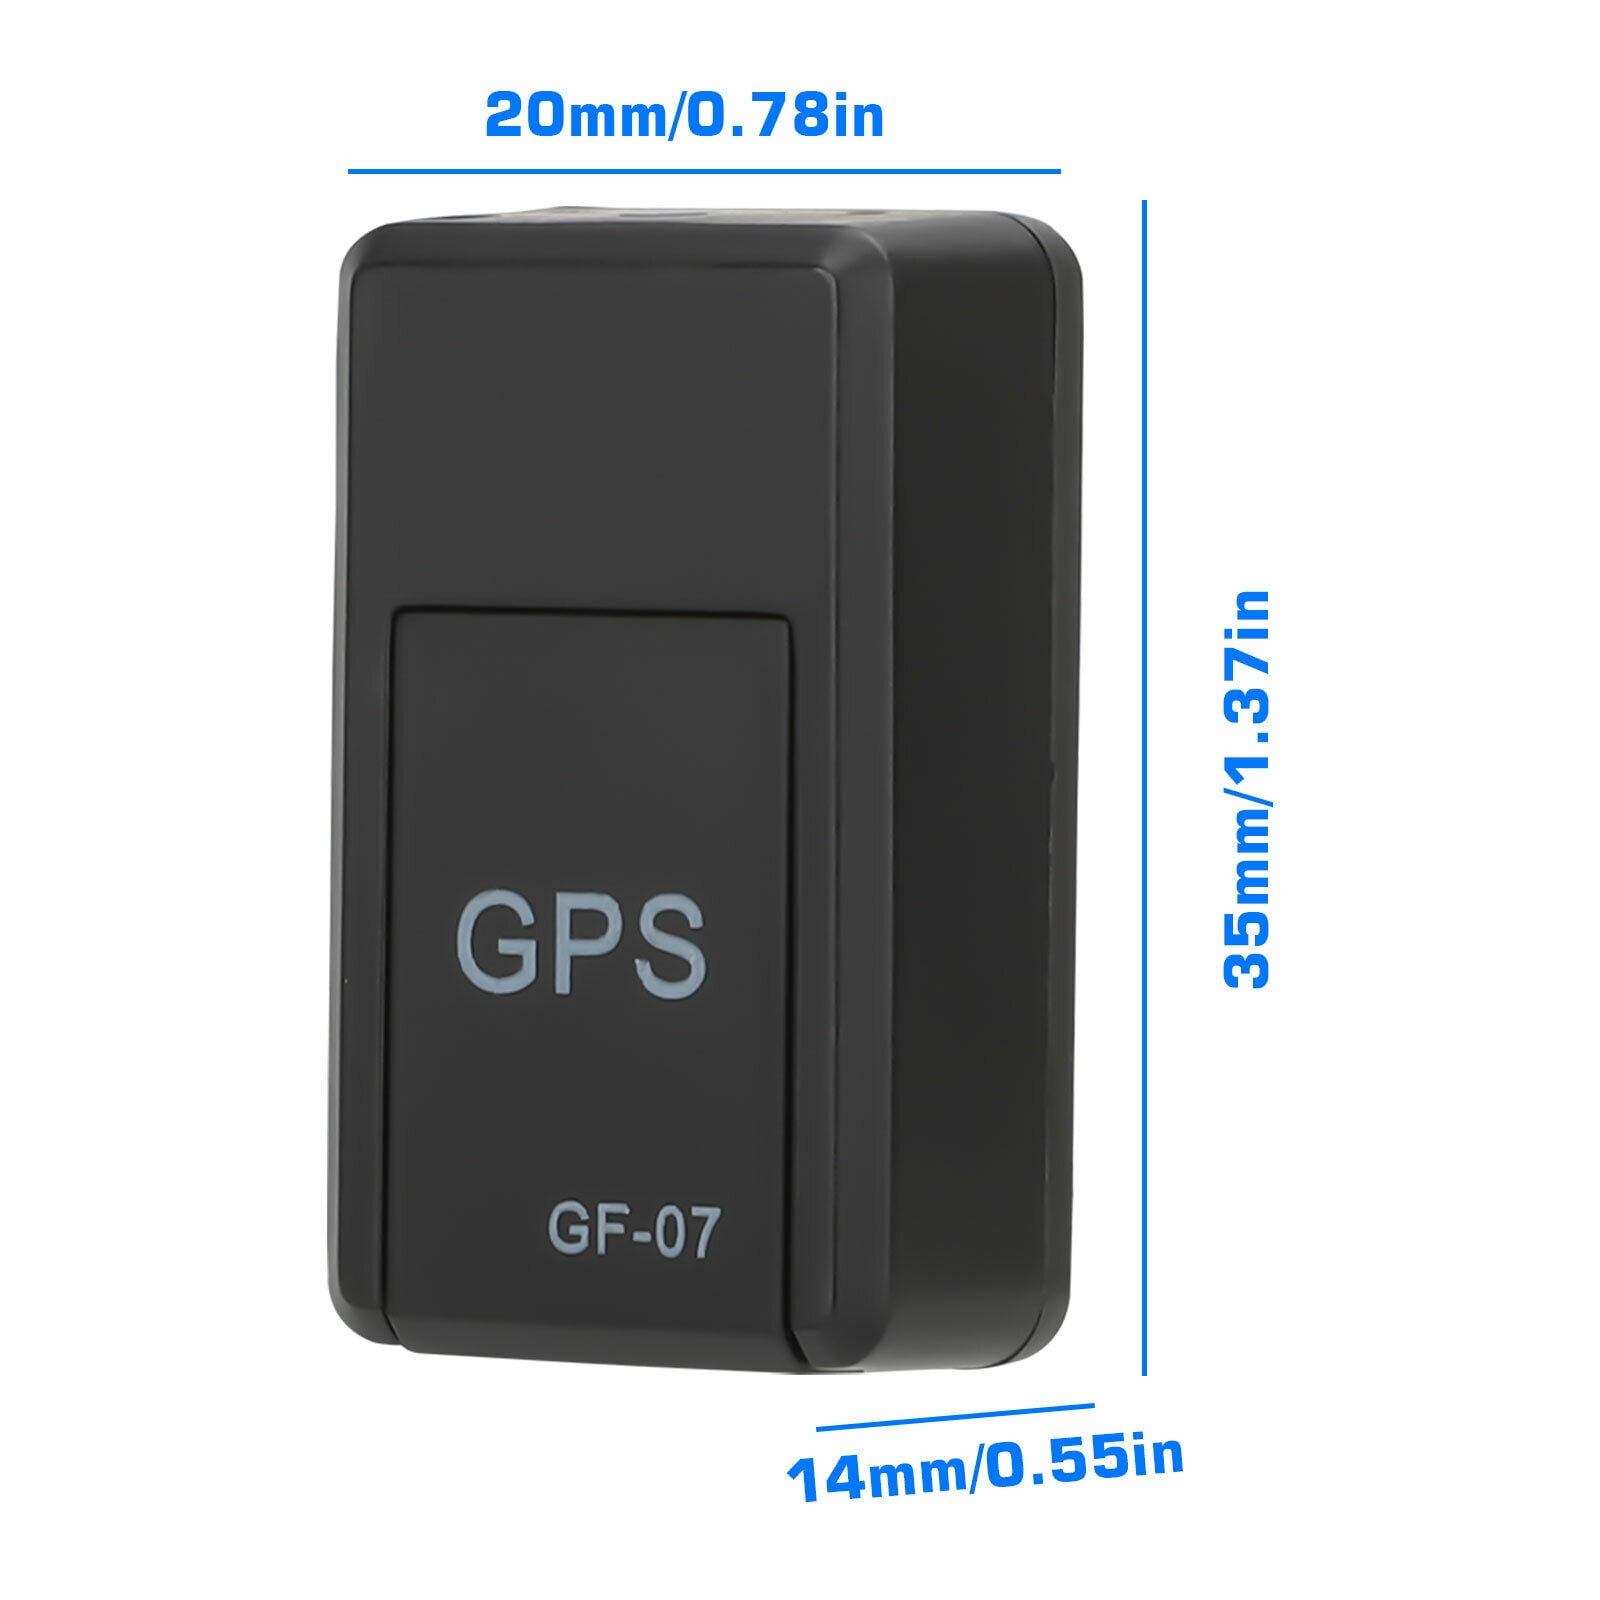 Trakkit GPS - WiFi GPS Tracker, No Monthly Fees